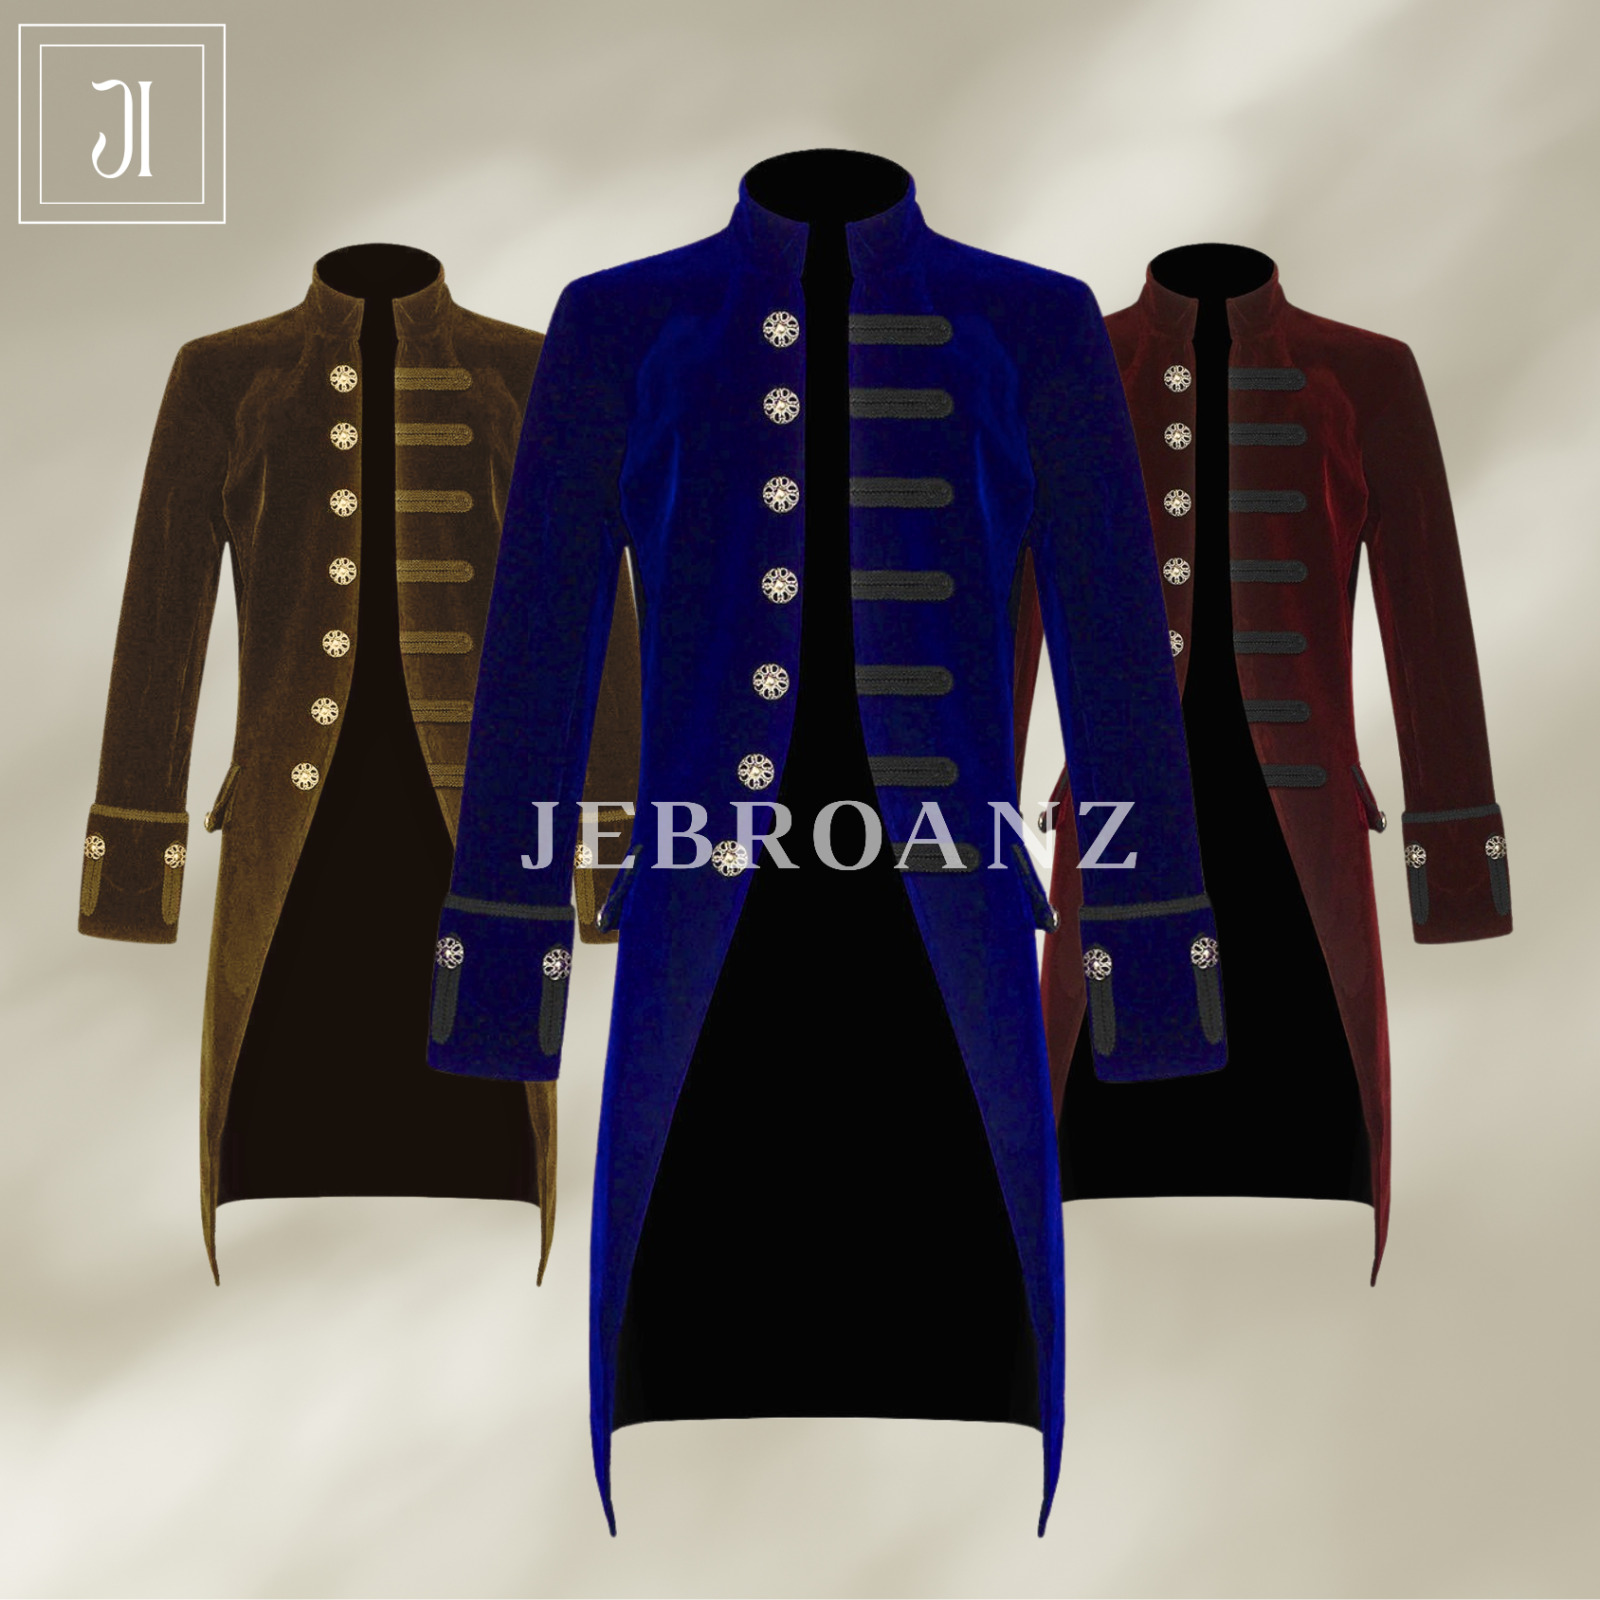 New Men\'s RENAISSANCE VELVET JACKET Tailcoat Gothic Steampunk Victorian Jacket